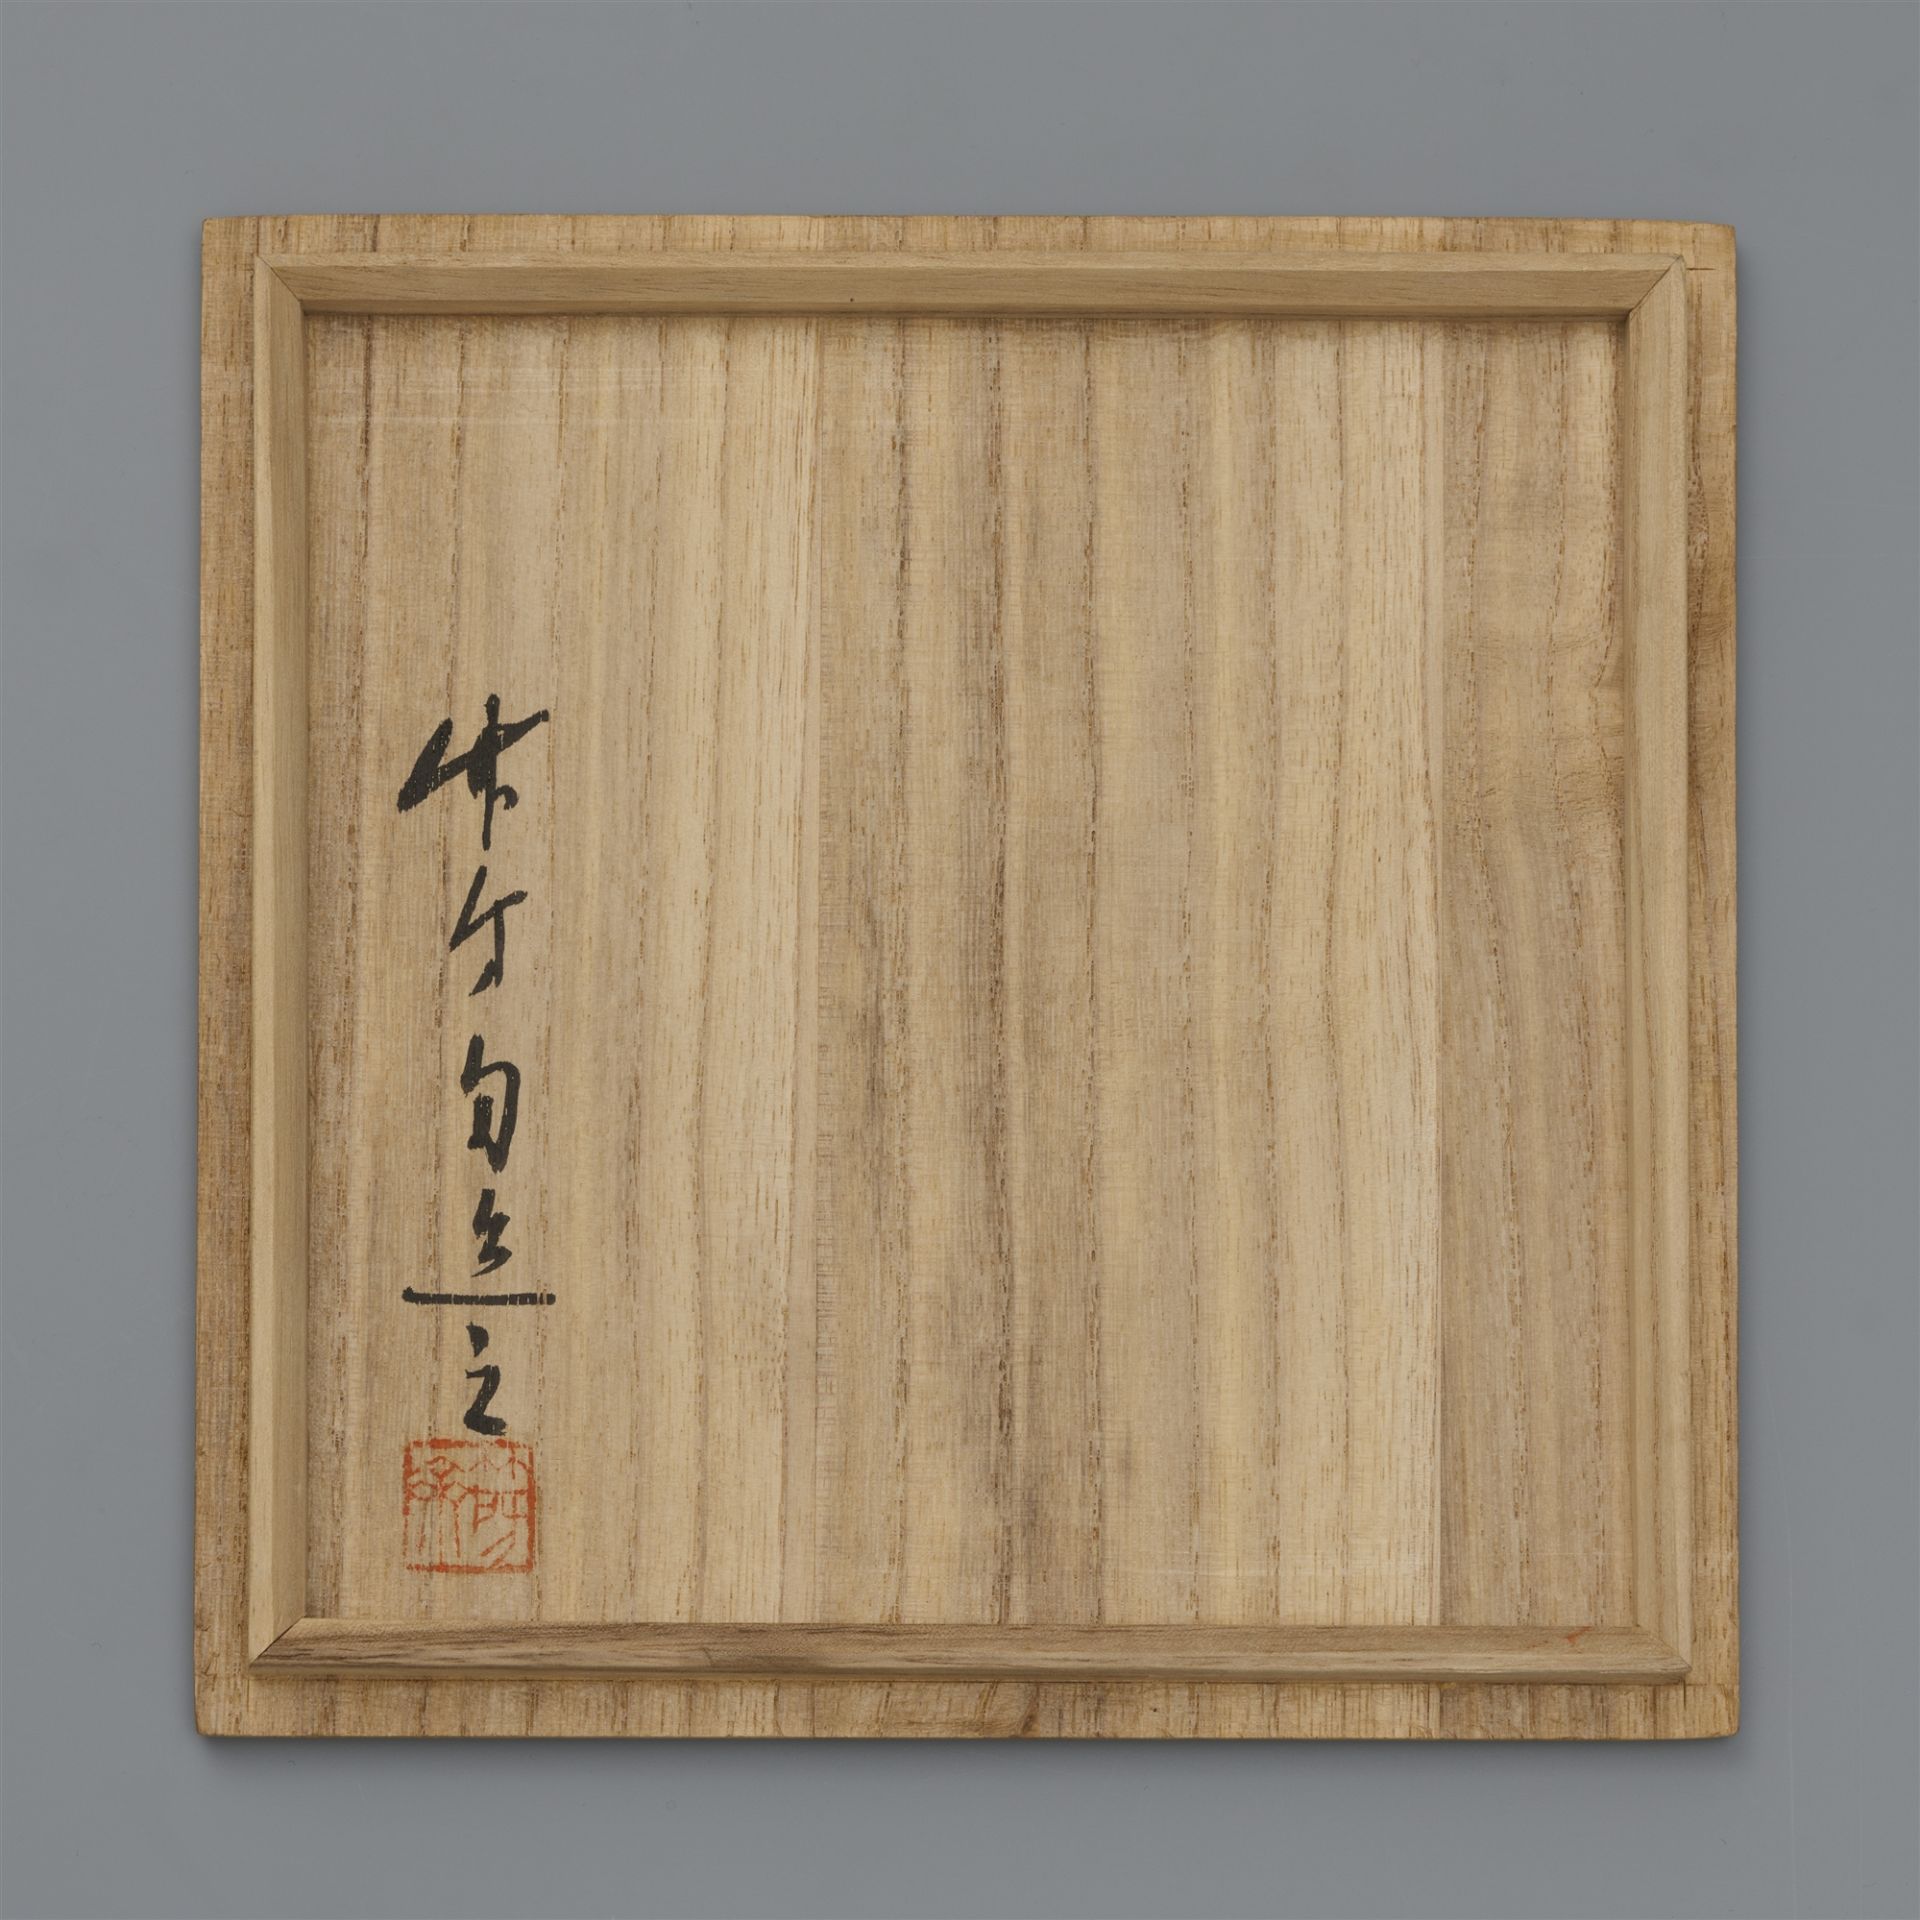 A small woven bamboo and rattan ikebana basket by Maeda Chikubôsai (1917-2003) - Image 4 of 4